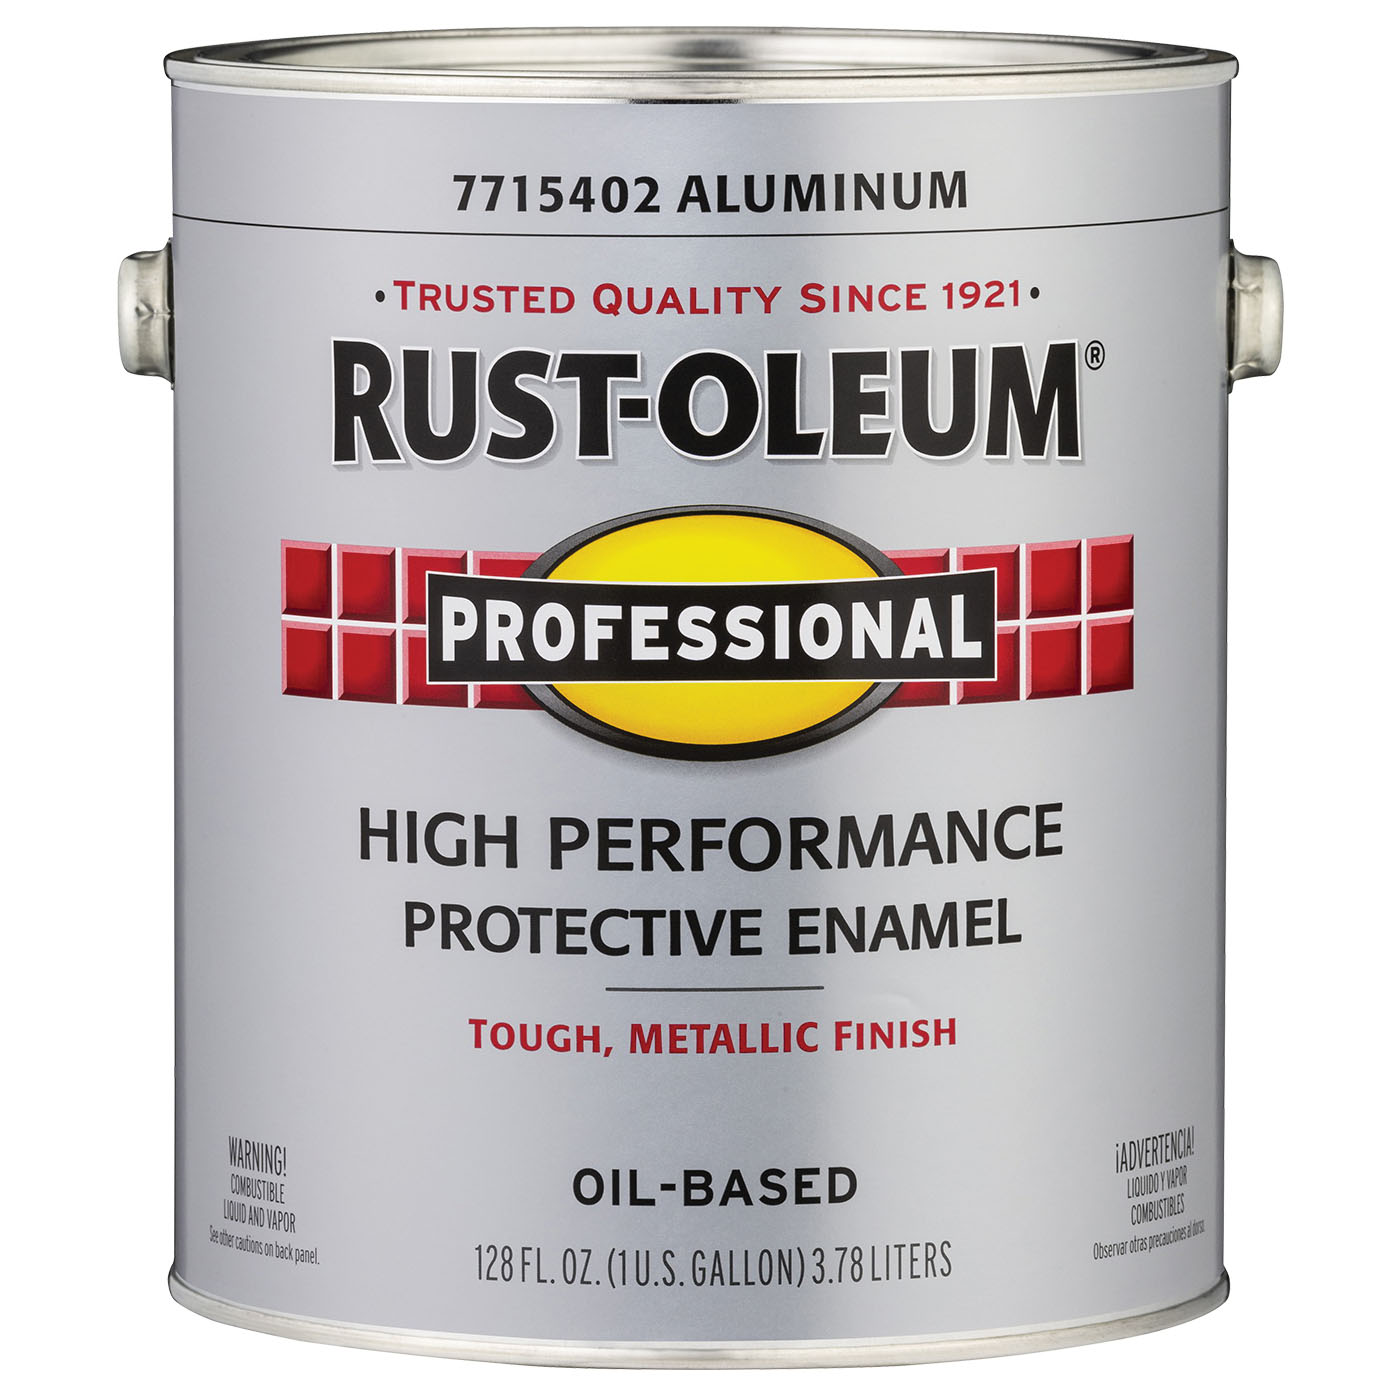 Rust-Oleum 7790730 Protective Enamel Paint, 8-Ounce, Flat White